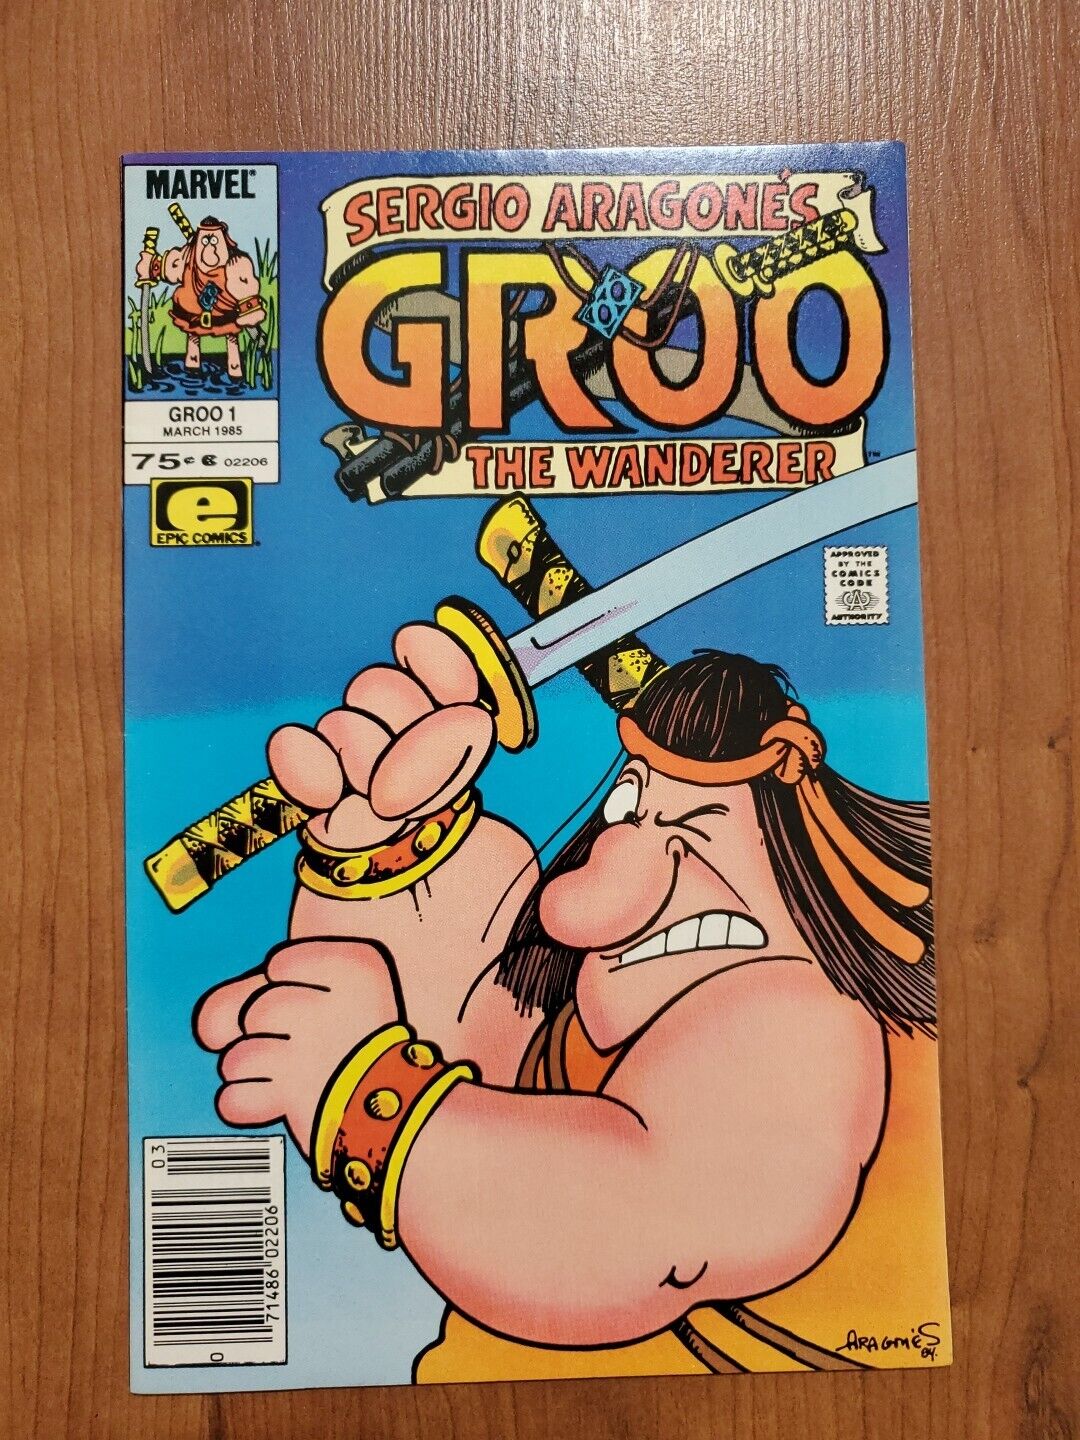 Sergio Aragones Groo The Wanderer Vo1 2 #1 Marvel Epic Comics VF+ 1985